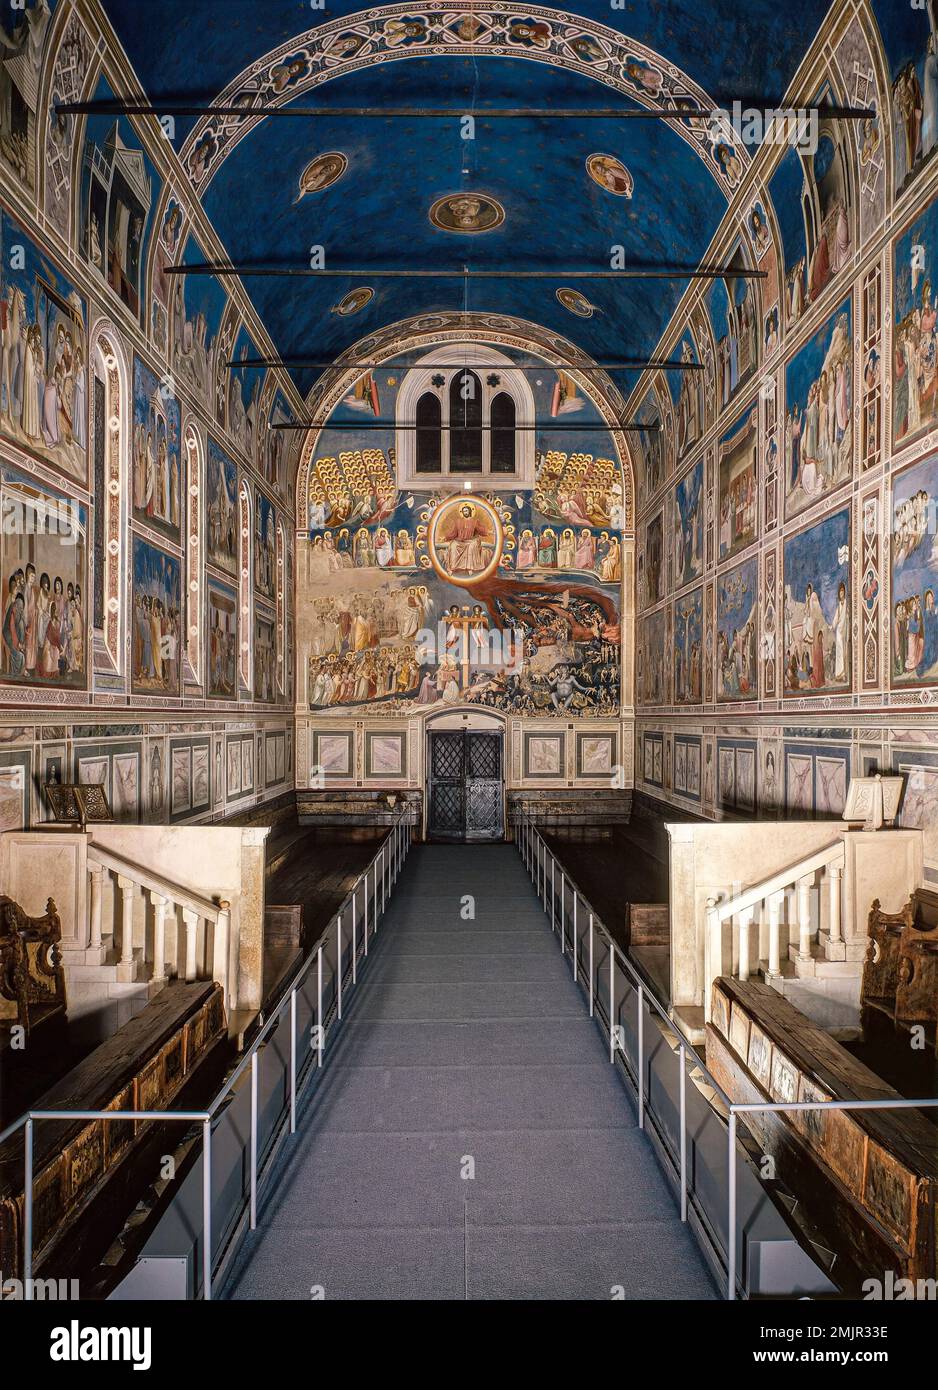 Italien Veneto Padua Scrovegni Kapelle von Giotto | Italien Veneto Padua Scrovegni Kapelle von Giotto Stockfoto